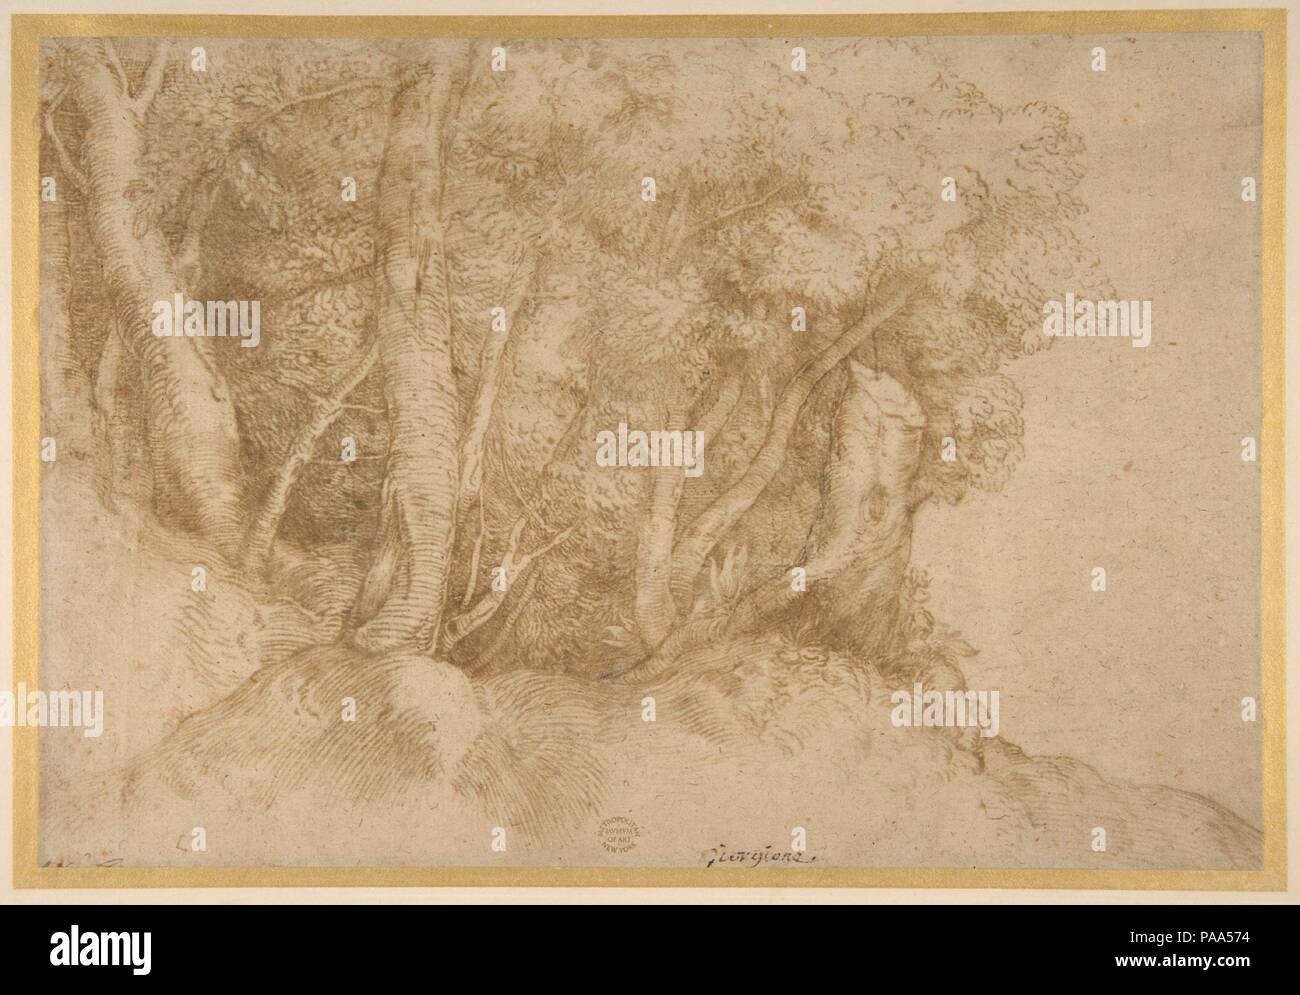 Gruppe von Bäumen. Artist: Tizian (Tiziano Vecellio) (Italienisch, Pieve di Cadore Ca. 1485/90?-1576 Venedig). Abmessungen: 8 9/16 x 12 9/16 in. (21,8 x 31,9 cm). Datum: 1485/90-1576. Museum: Metropolitan Museum of Art, New York, USA. Stockfoto